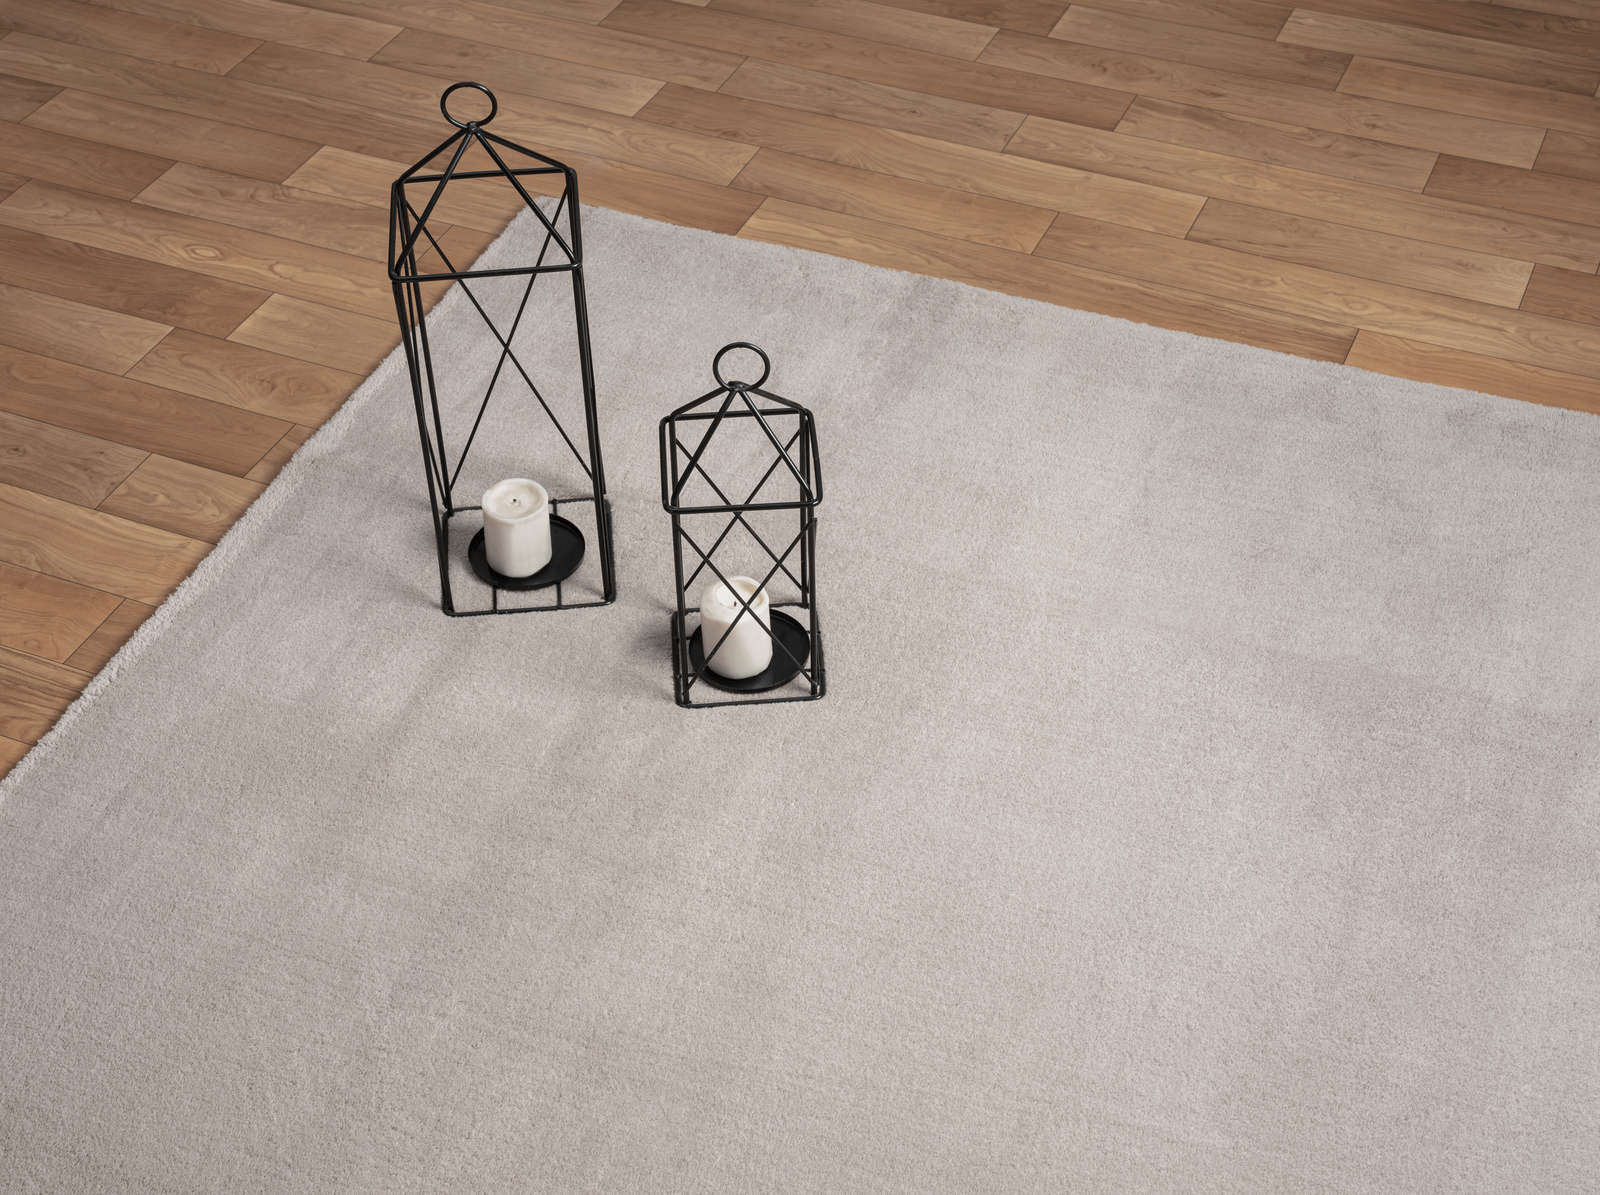             Fashionable high pile carpet in sand - 230 x 160 cm
        